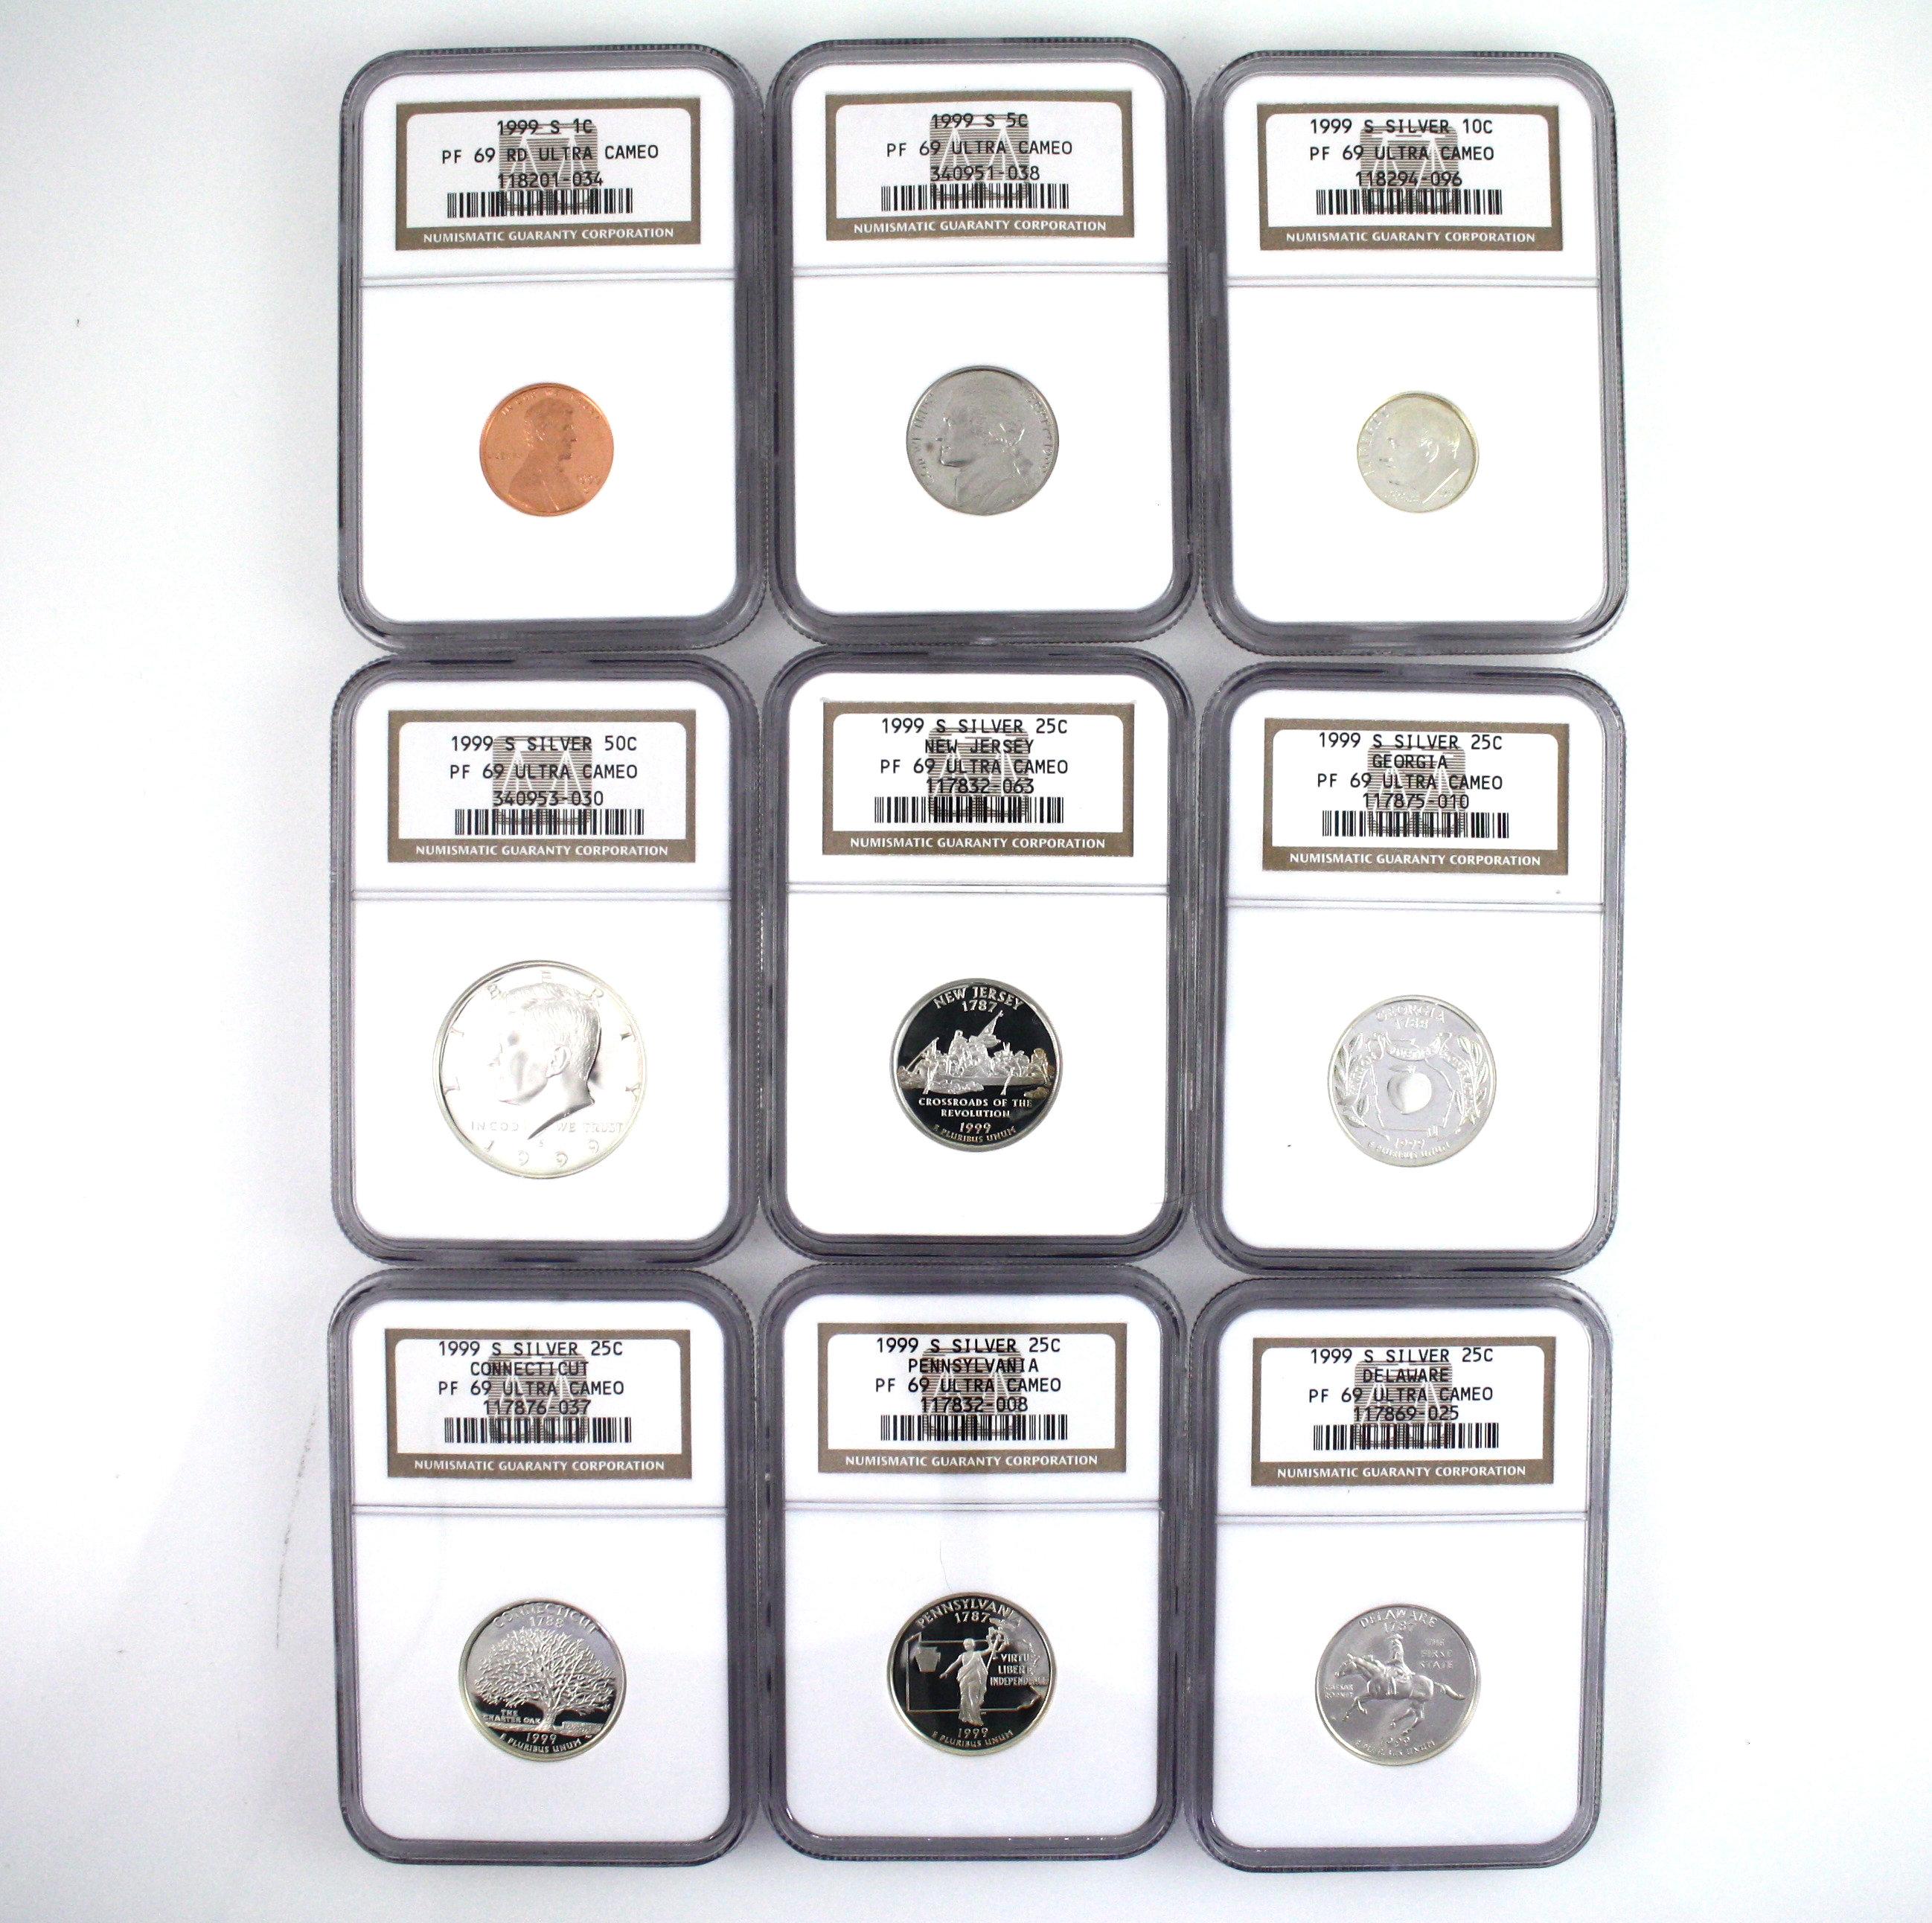 Certified complete 9-piece 1999-S U.S. silver proof set